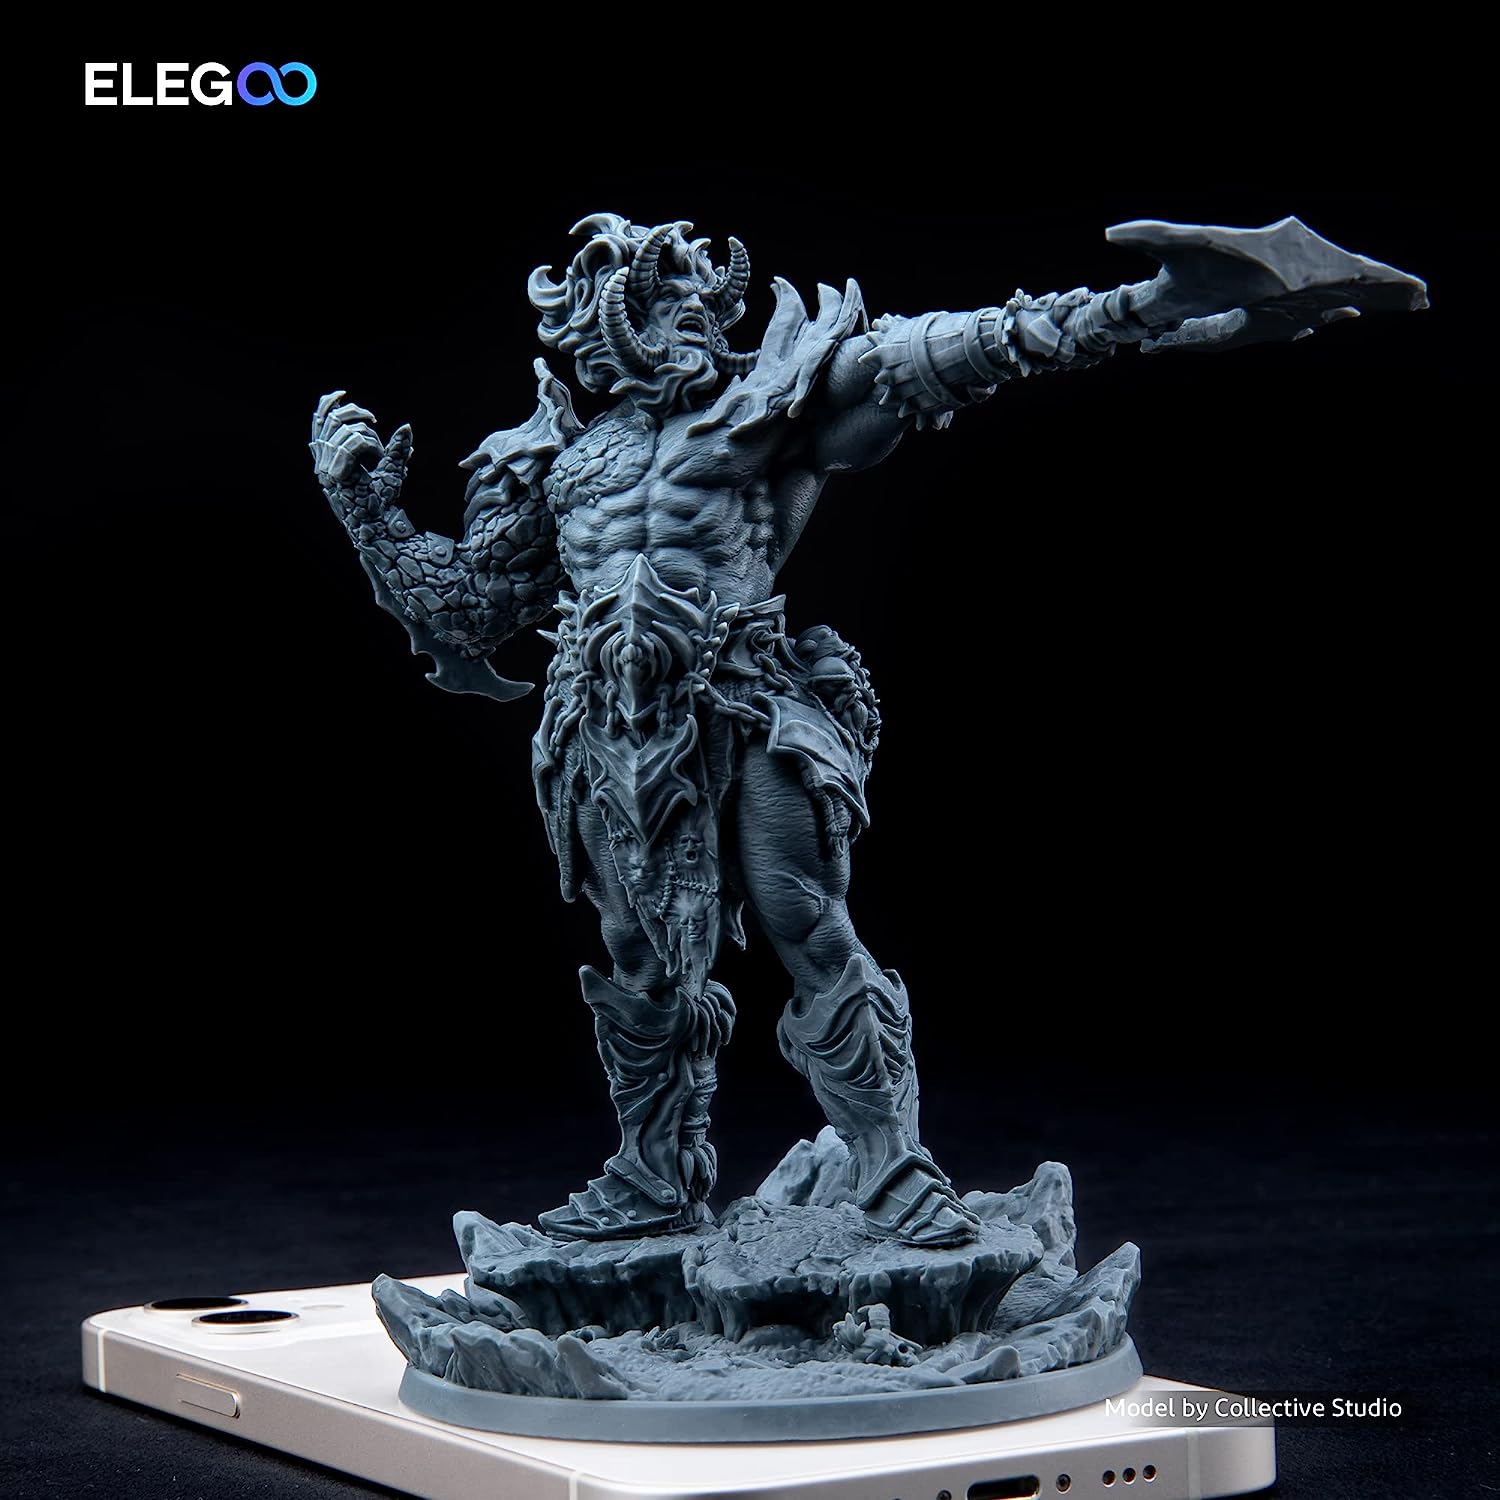 ELEGOO 8K Standard Photopolymer 3D Printer Resin